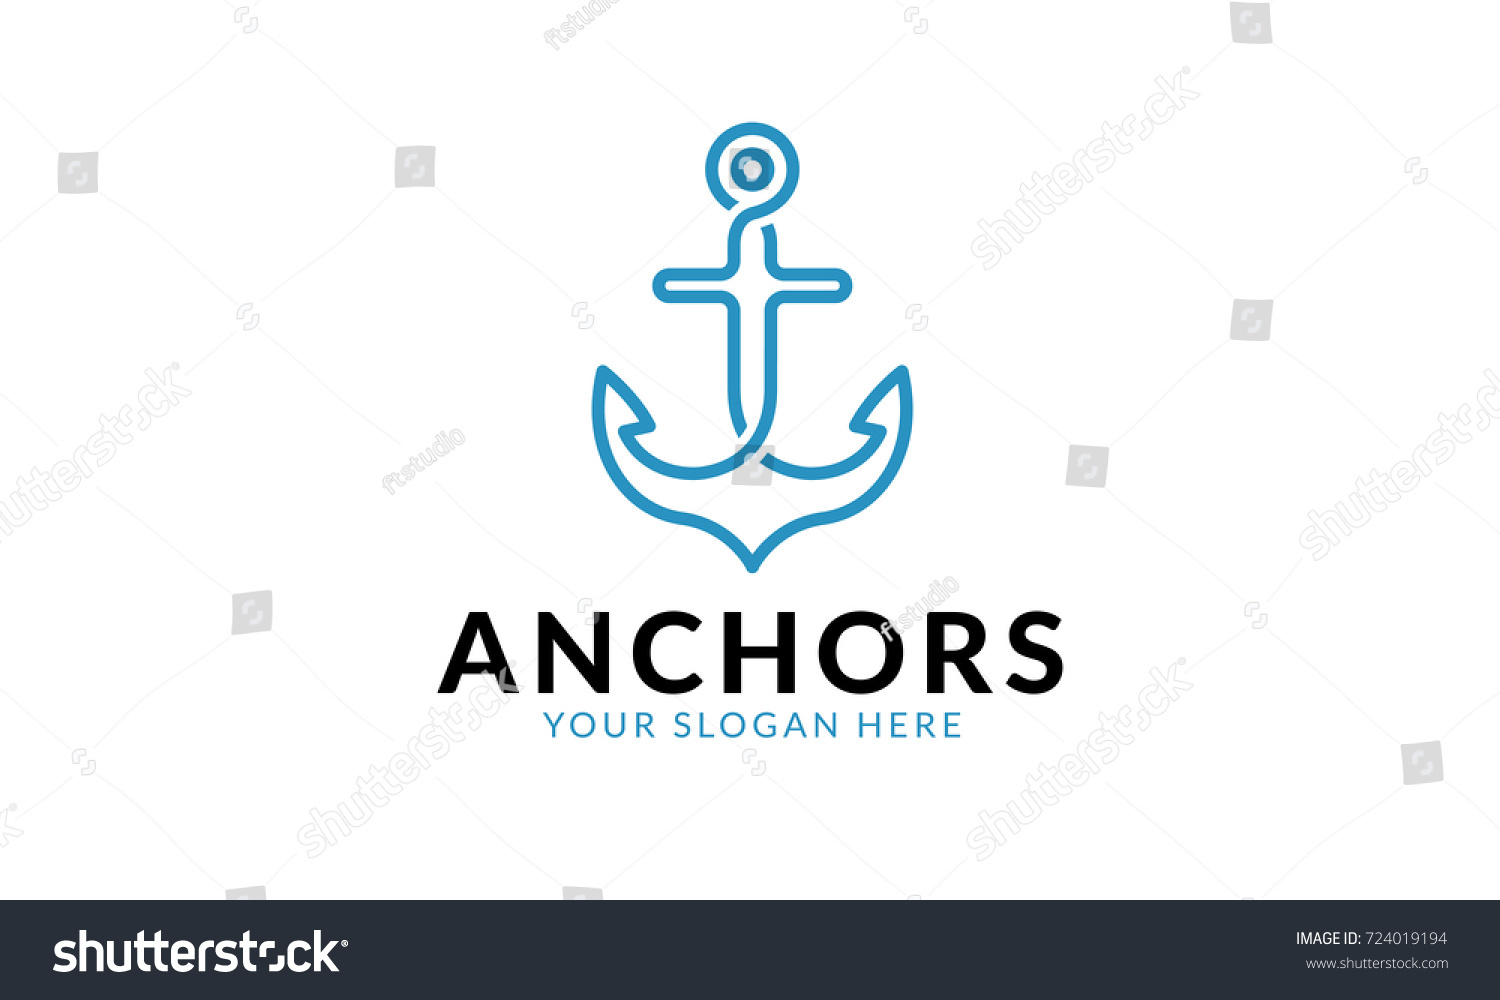 SVG of Anchors logo svg